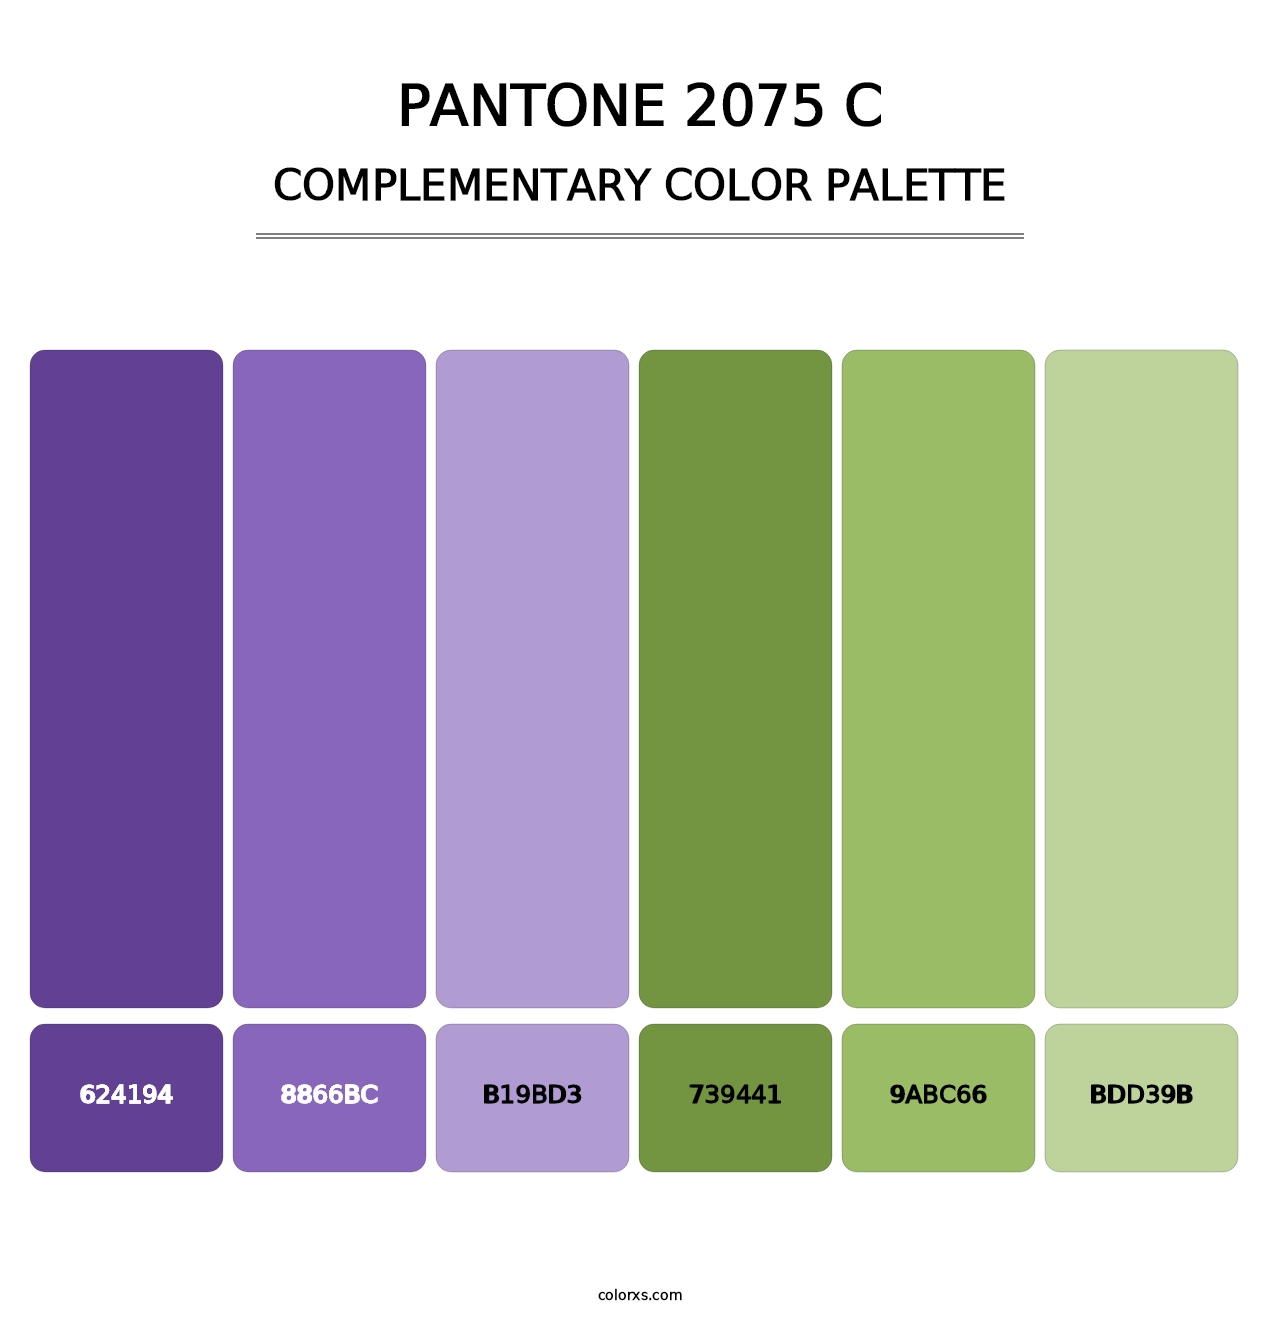 PANTONE 2075 C - Complementary Color Palette